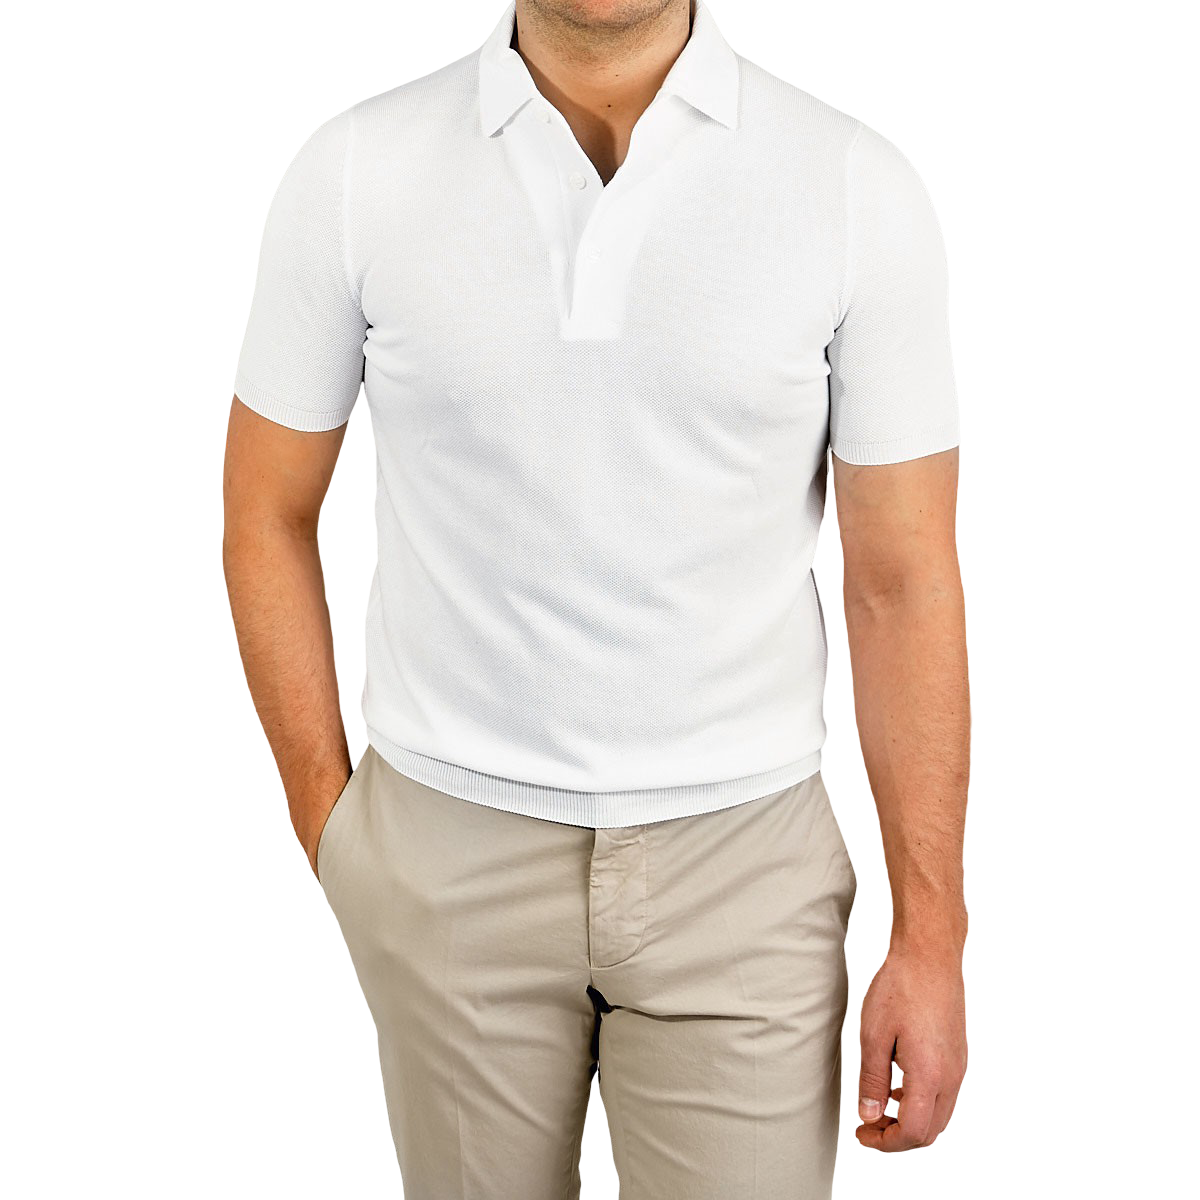 Gran Sasso - White Fresh Cotton Polo Shirt | Baltzar